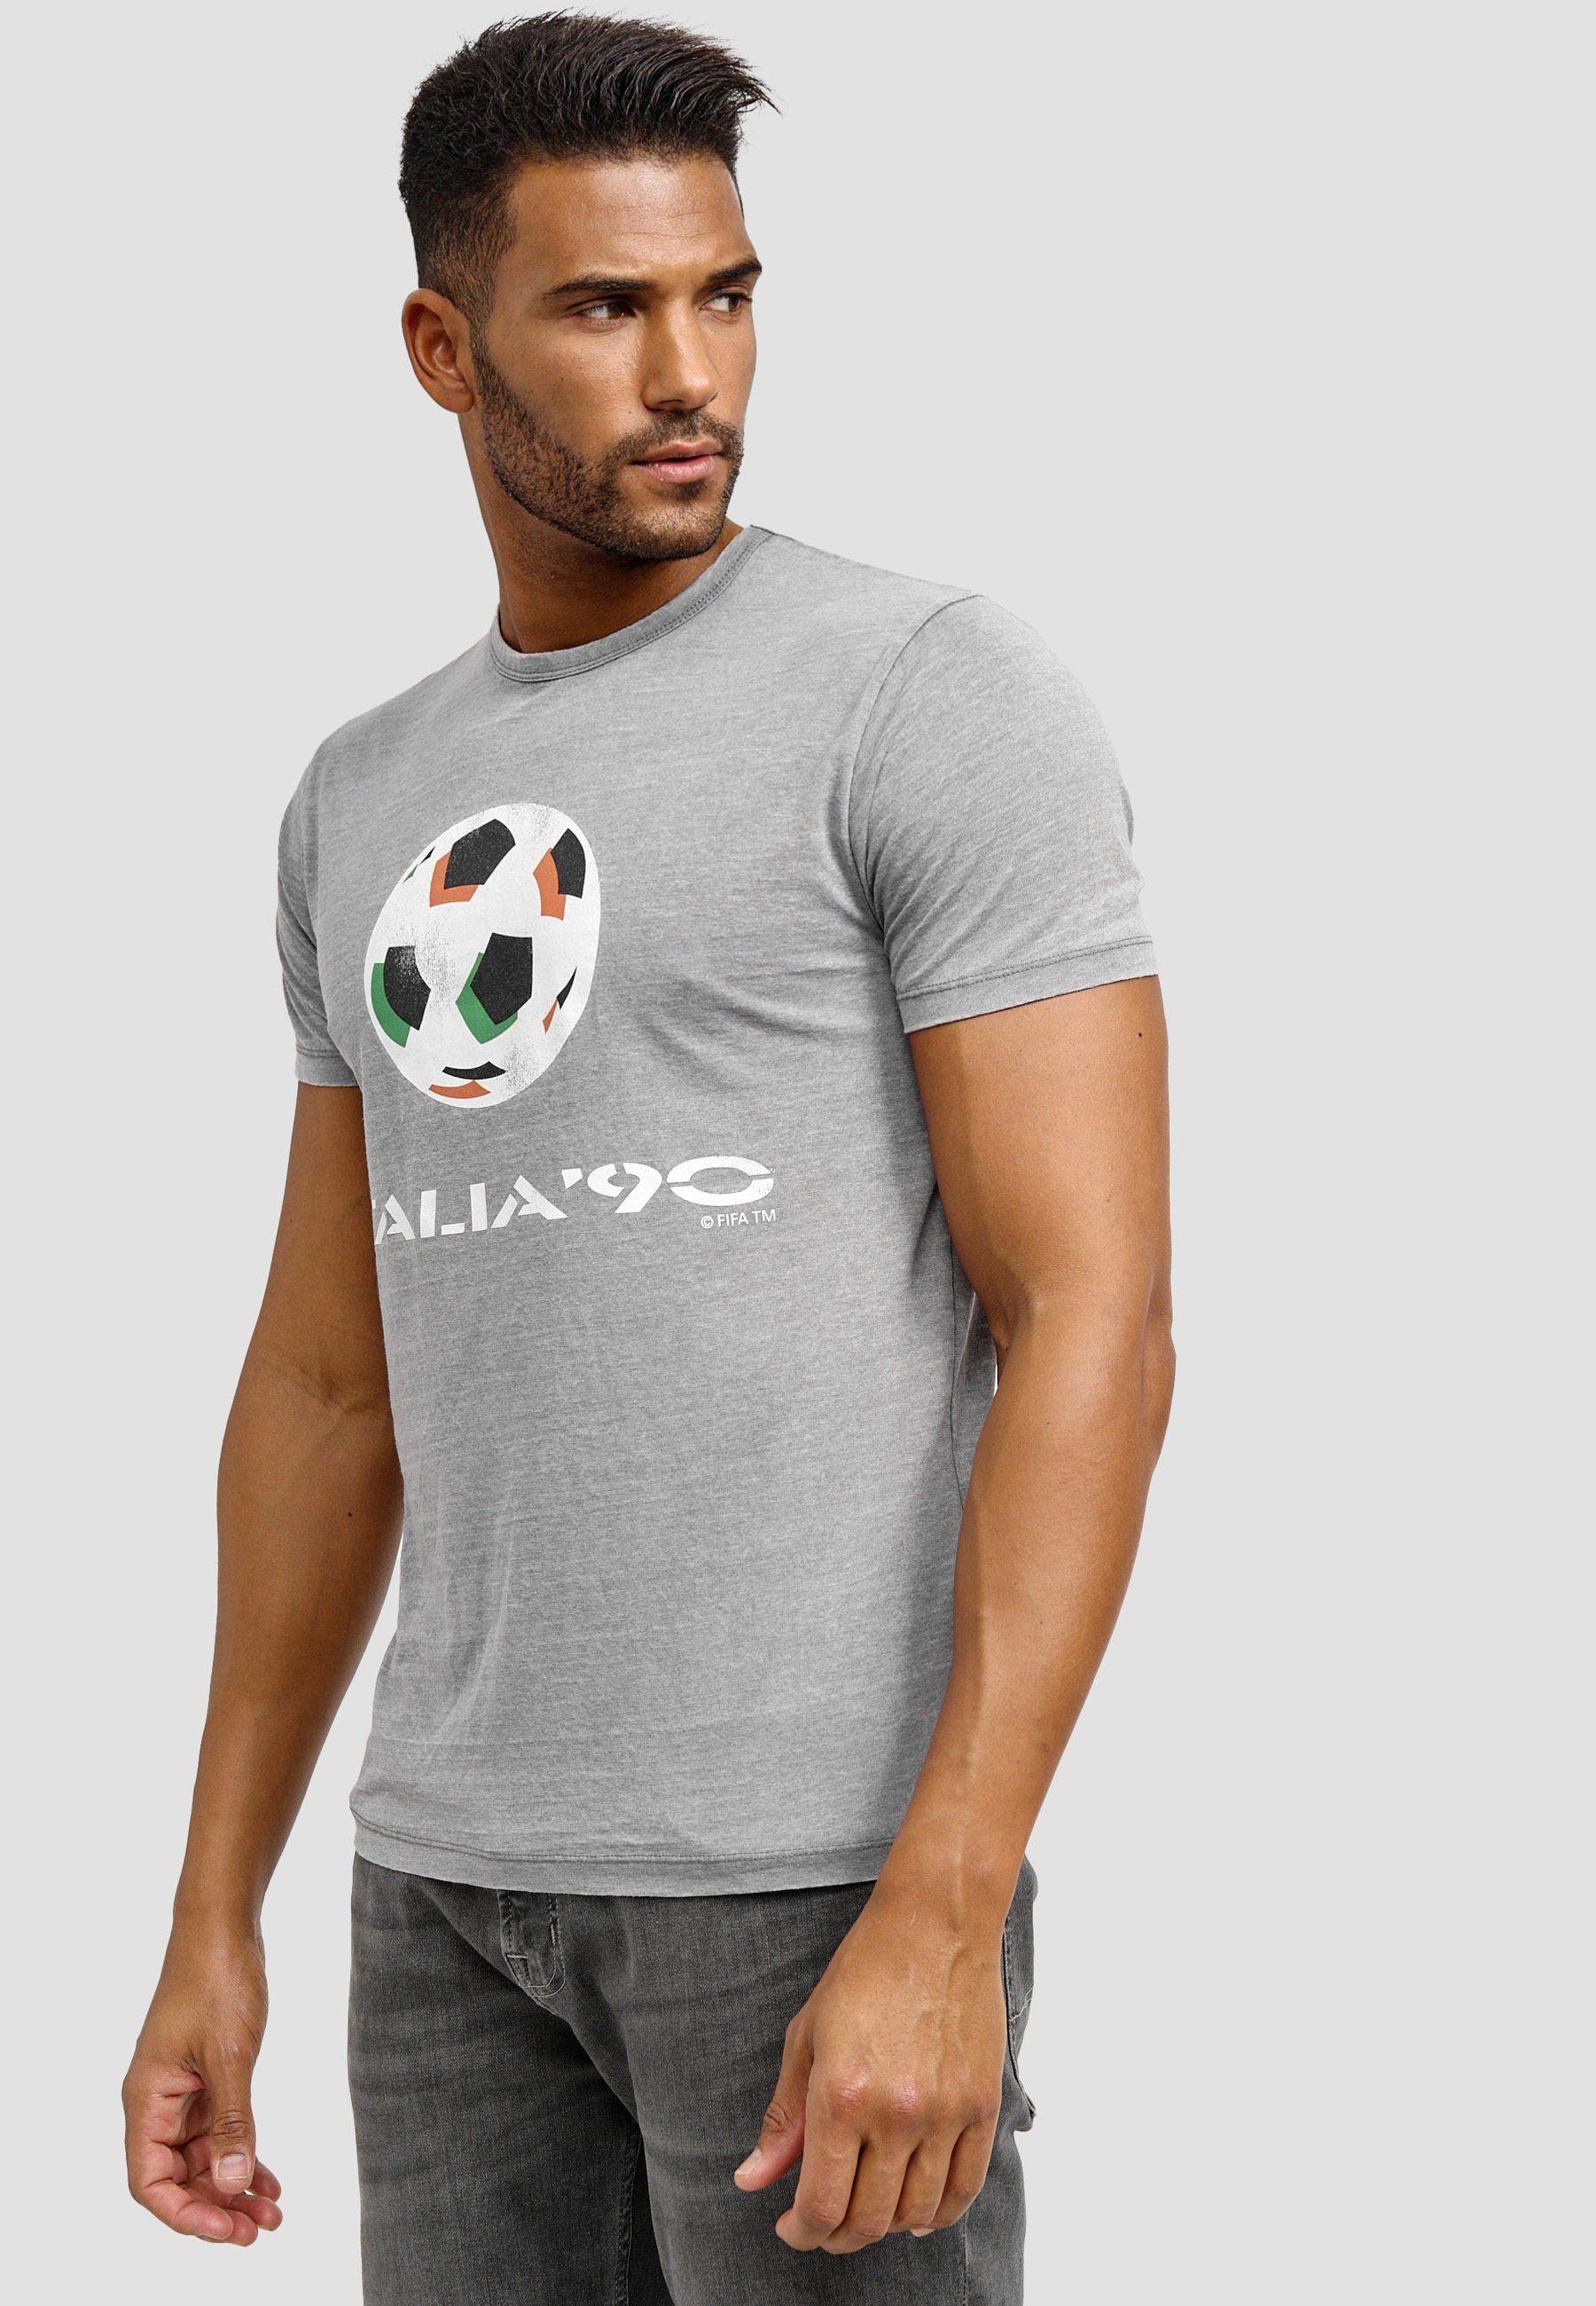 Cup 1990 T-Shirt Bio-Baumwolle Recovered FIFA zertifizierte World GOTS